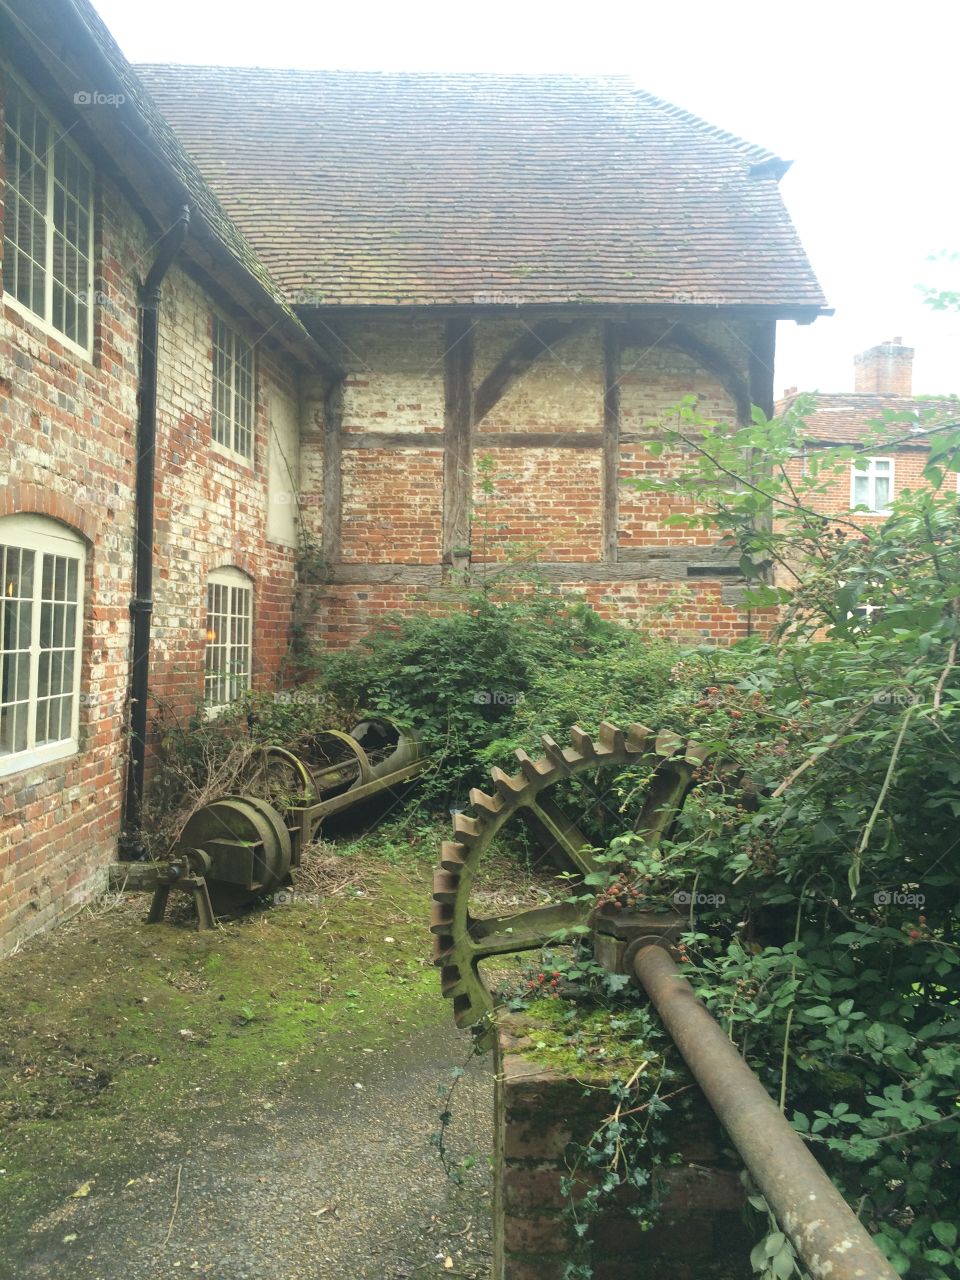 English mill